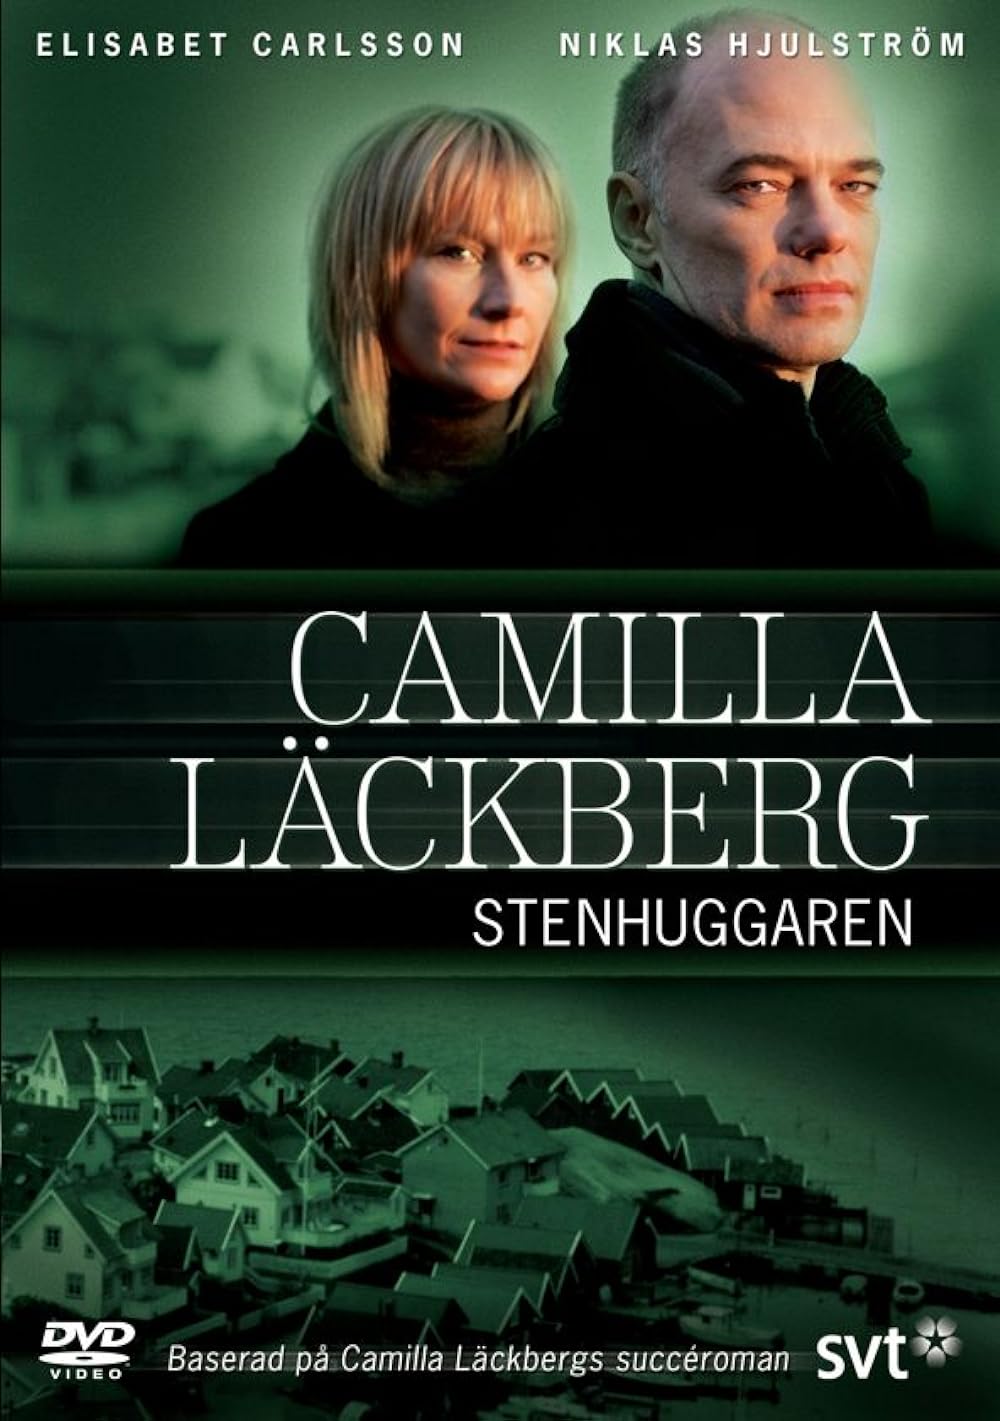 Camilla Lackberg DvD 3 van 4 Stenhuggeren 2009